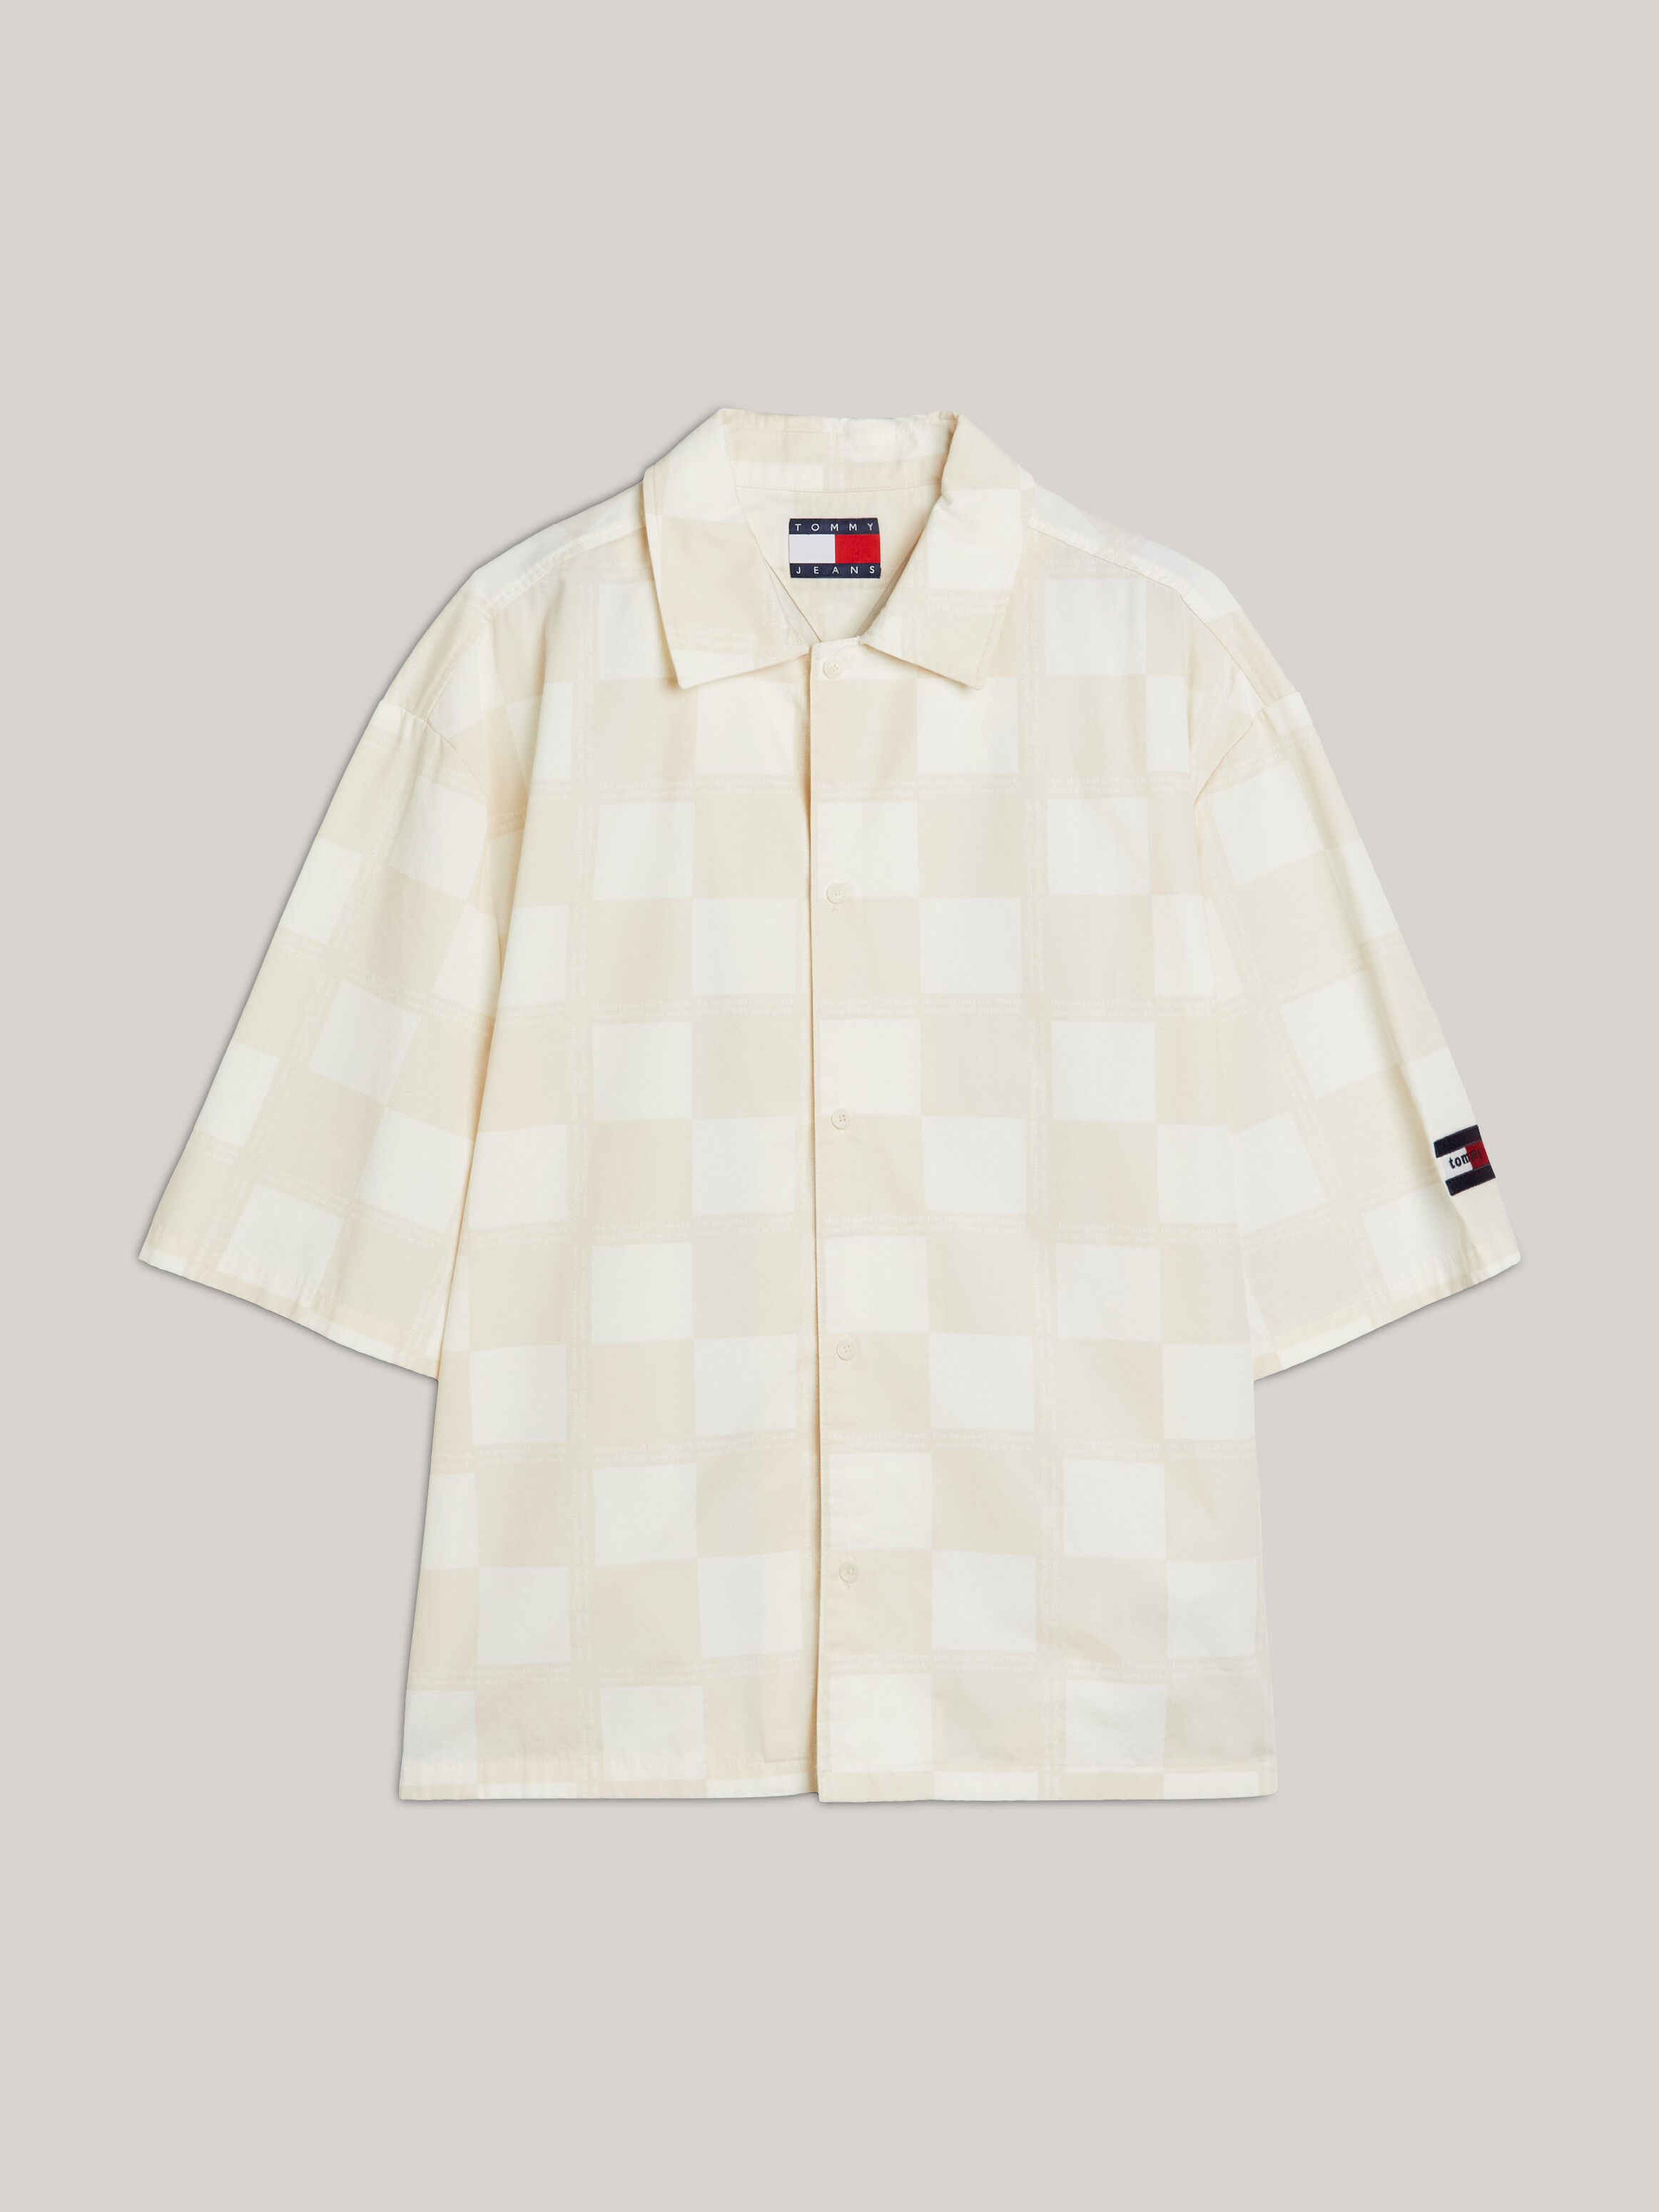 Dual Gender Checkerboard Boxy Short Sleeve Shirt Highland Spirit